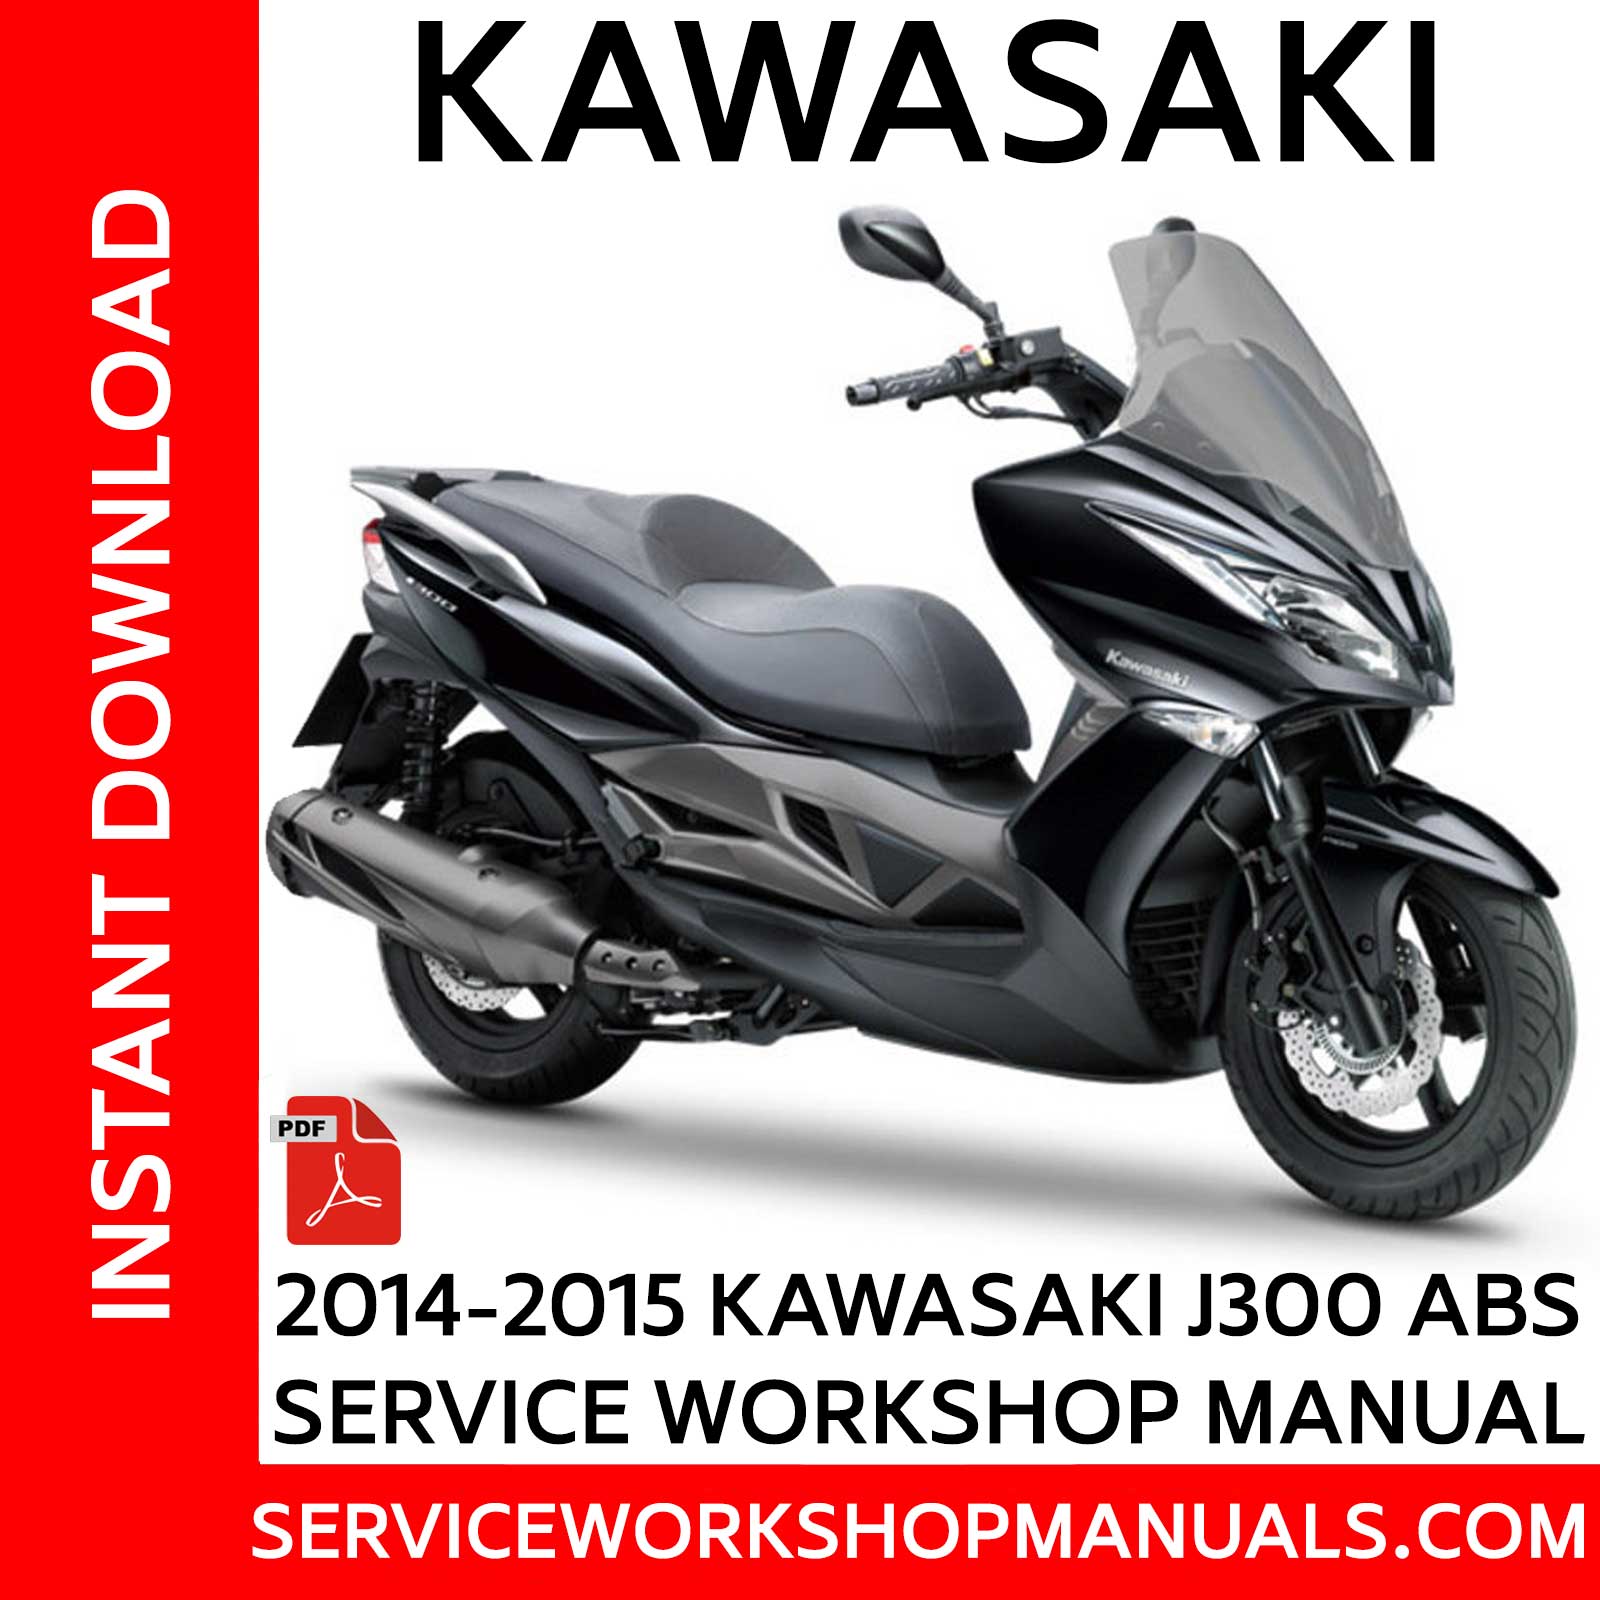 2014-2015 Kawasaki J300 Workshop Manual - Service Workshop Manuals